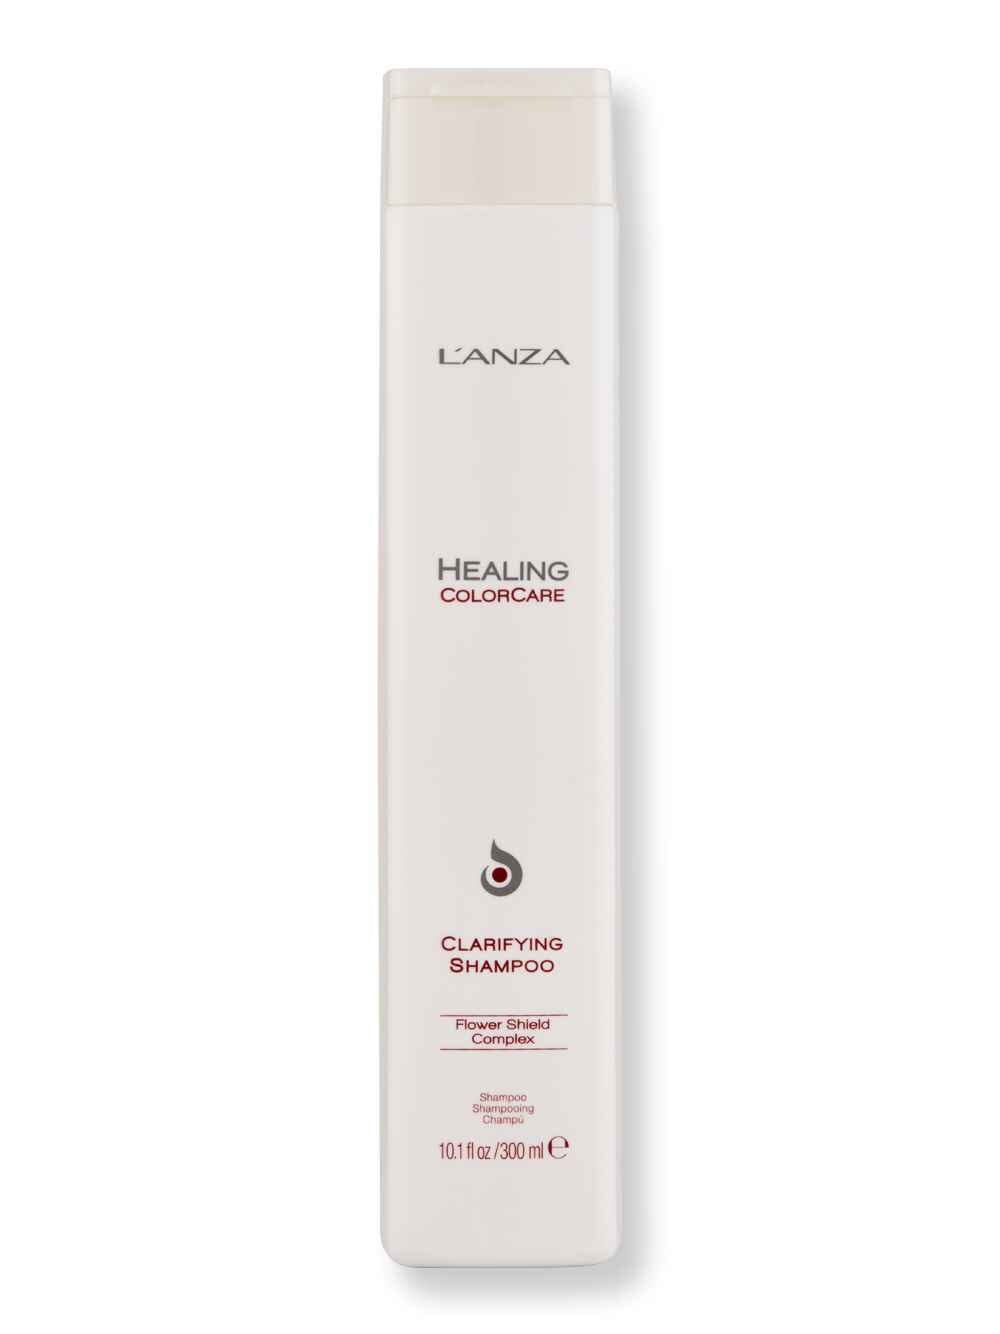 L'Anza L'Anza Healing Colorcare Clarifying Shampoo 300 ml Shampoos 